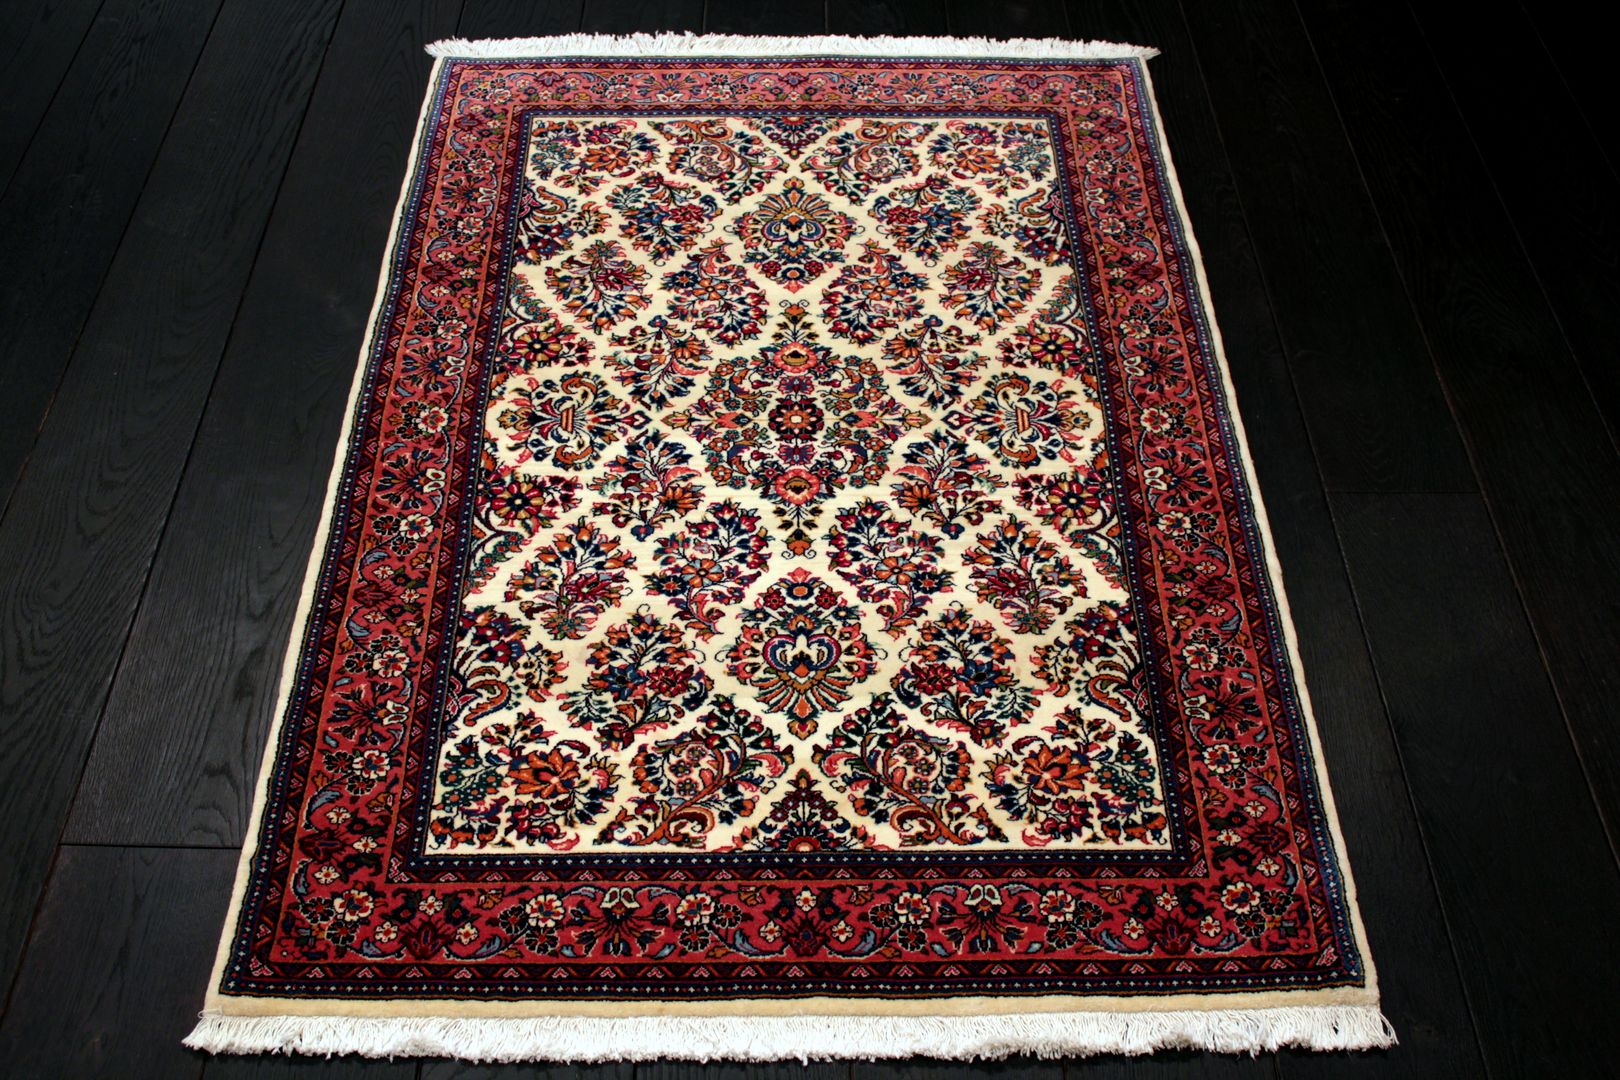 Irańskie dywany tradycyjne, Sarmatia Trading Sarmatia Trading Floors Wool Orange Carpets & rugs